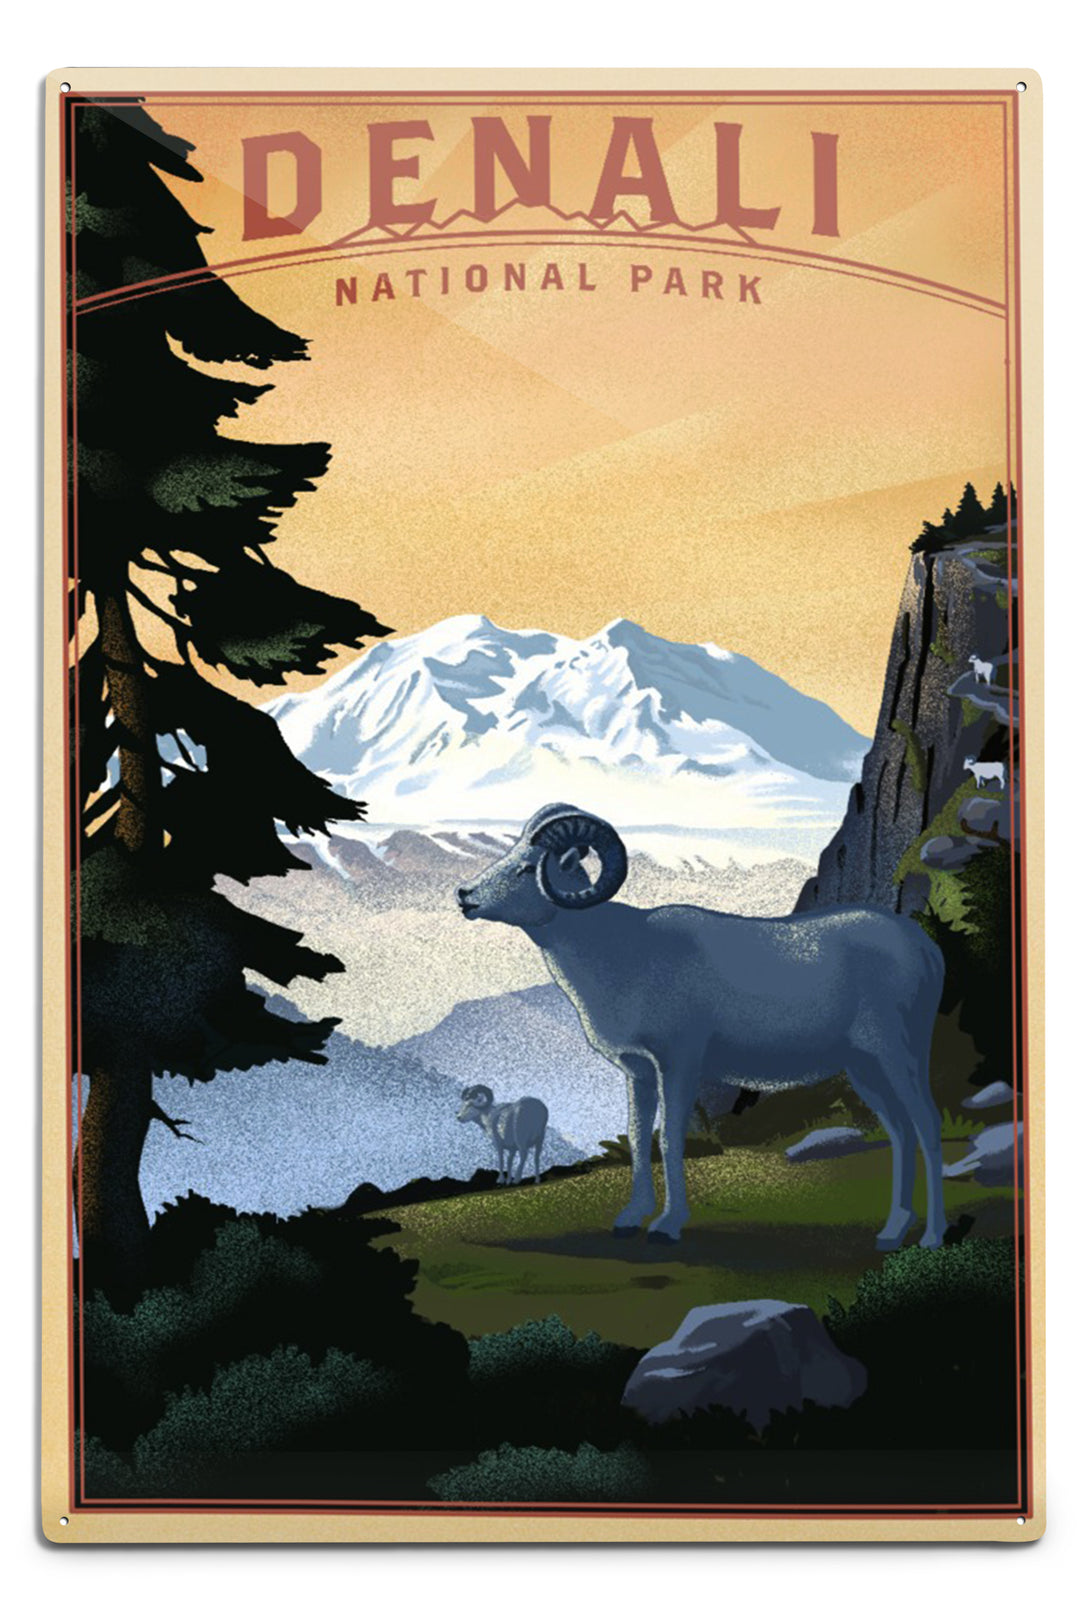 Denali National Park, Alaska, Dall Sheep and Mountain, Lithograph National Park Series, Metal Signs